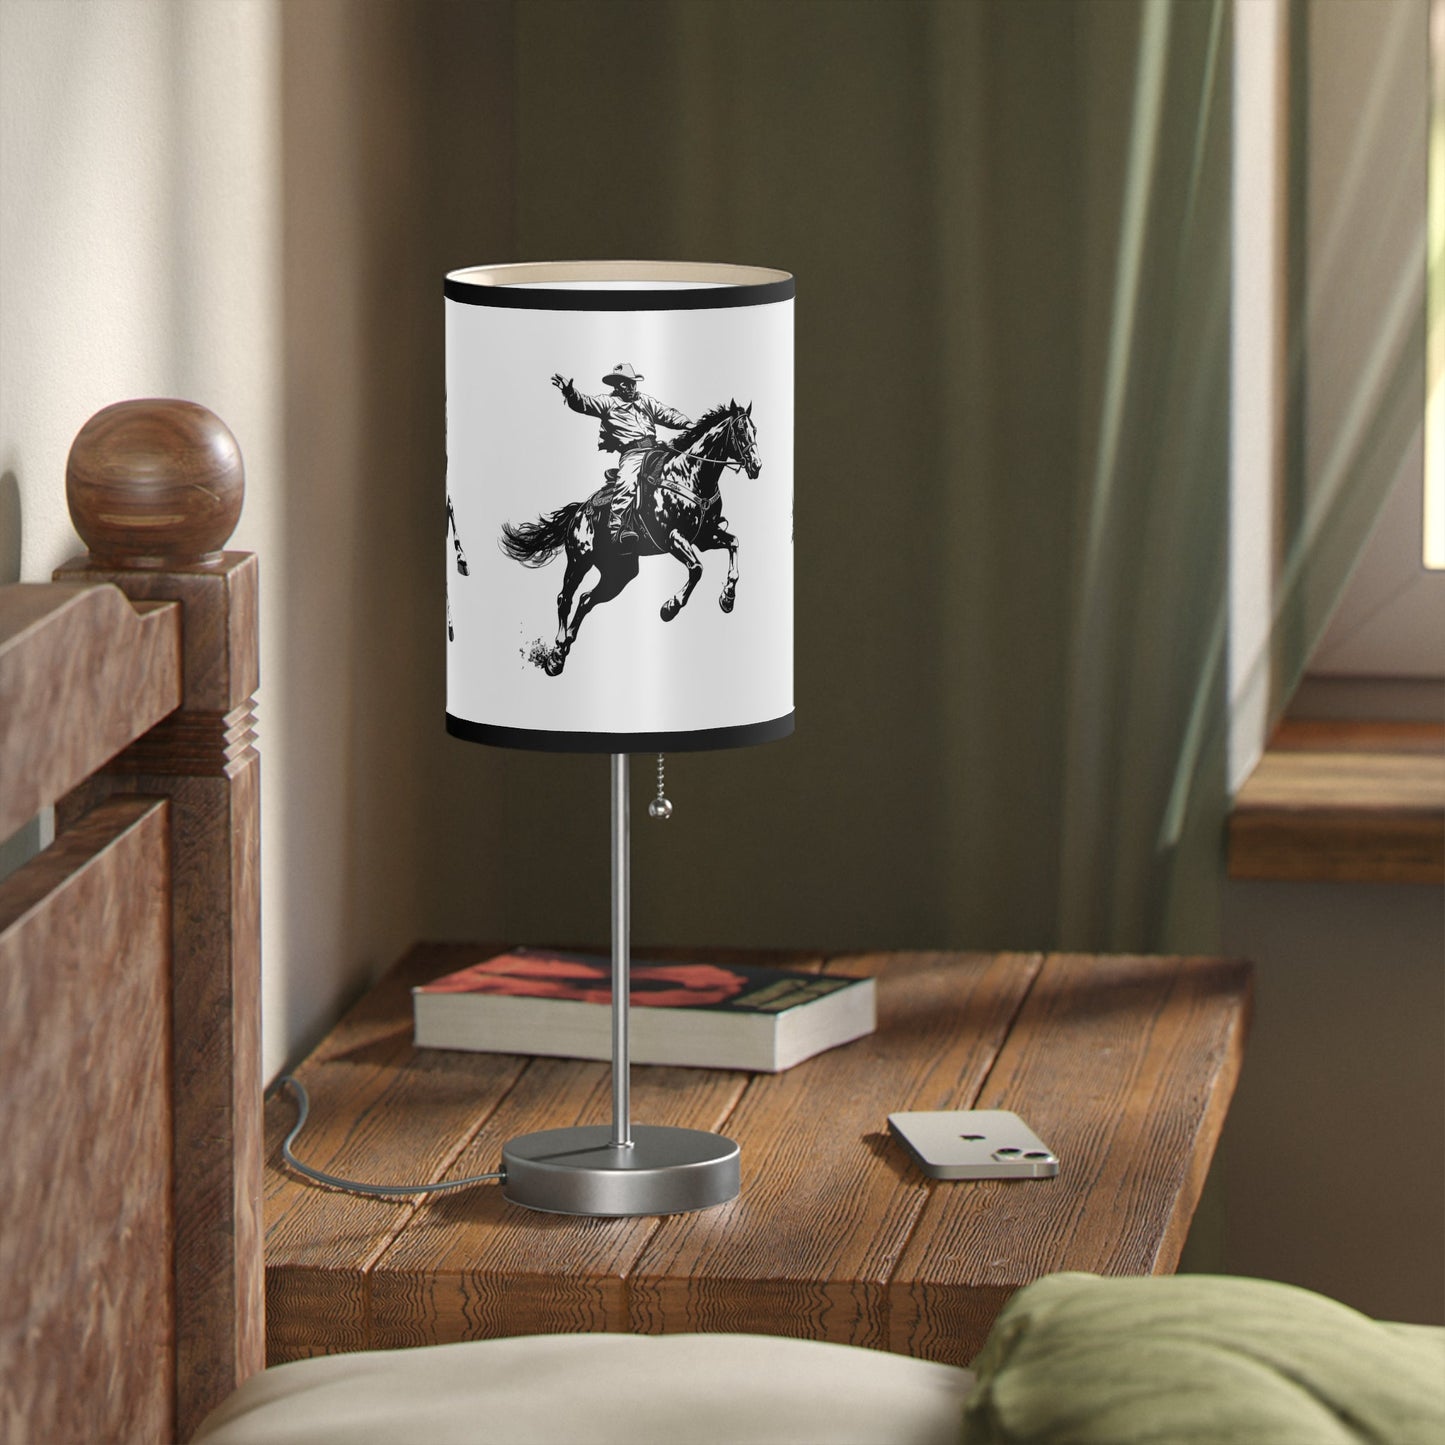 Cowboy Bronco Rider Lamp, 3 Black and White Ink Drawings Lamp, Horse Backriding - FlooredByArt